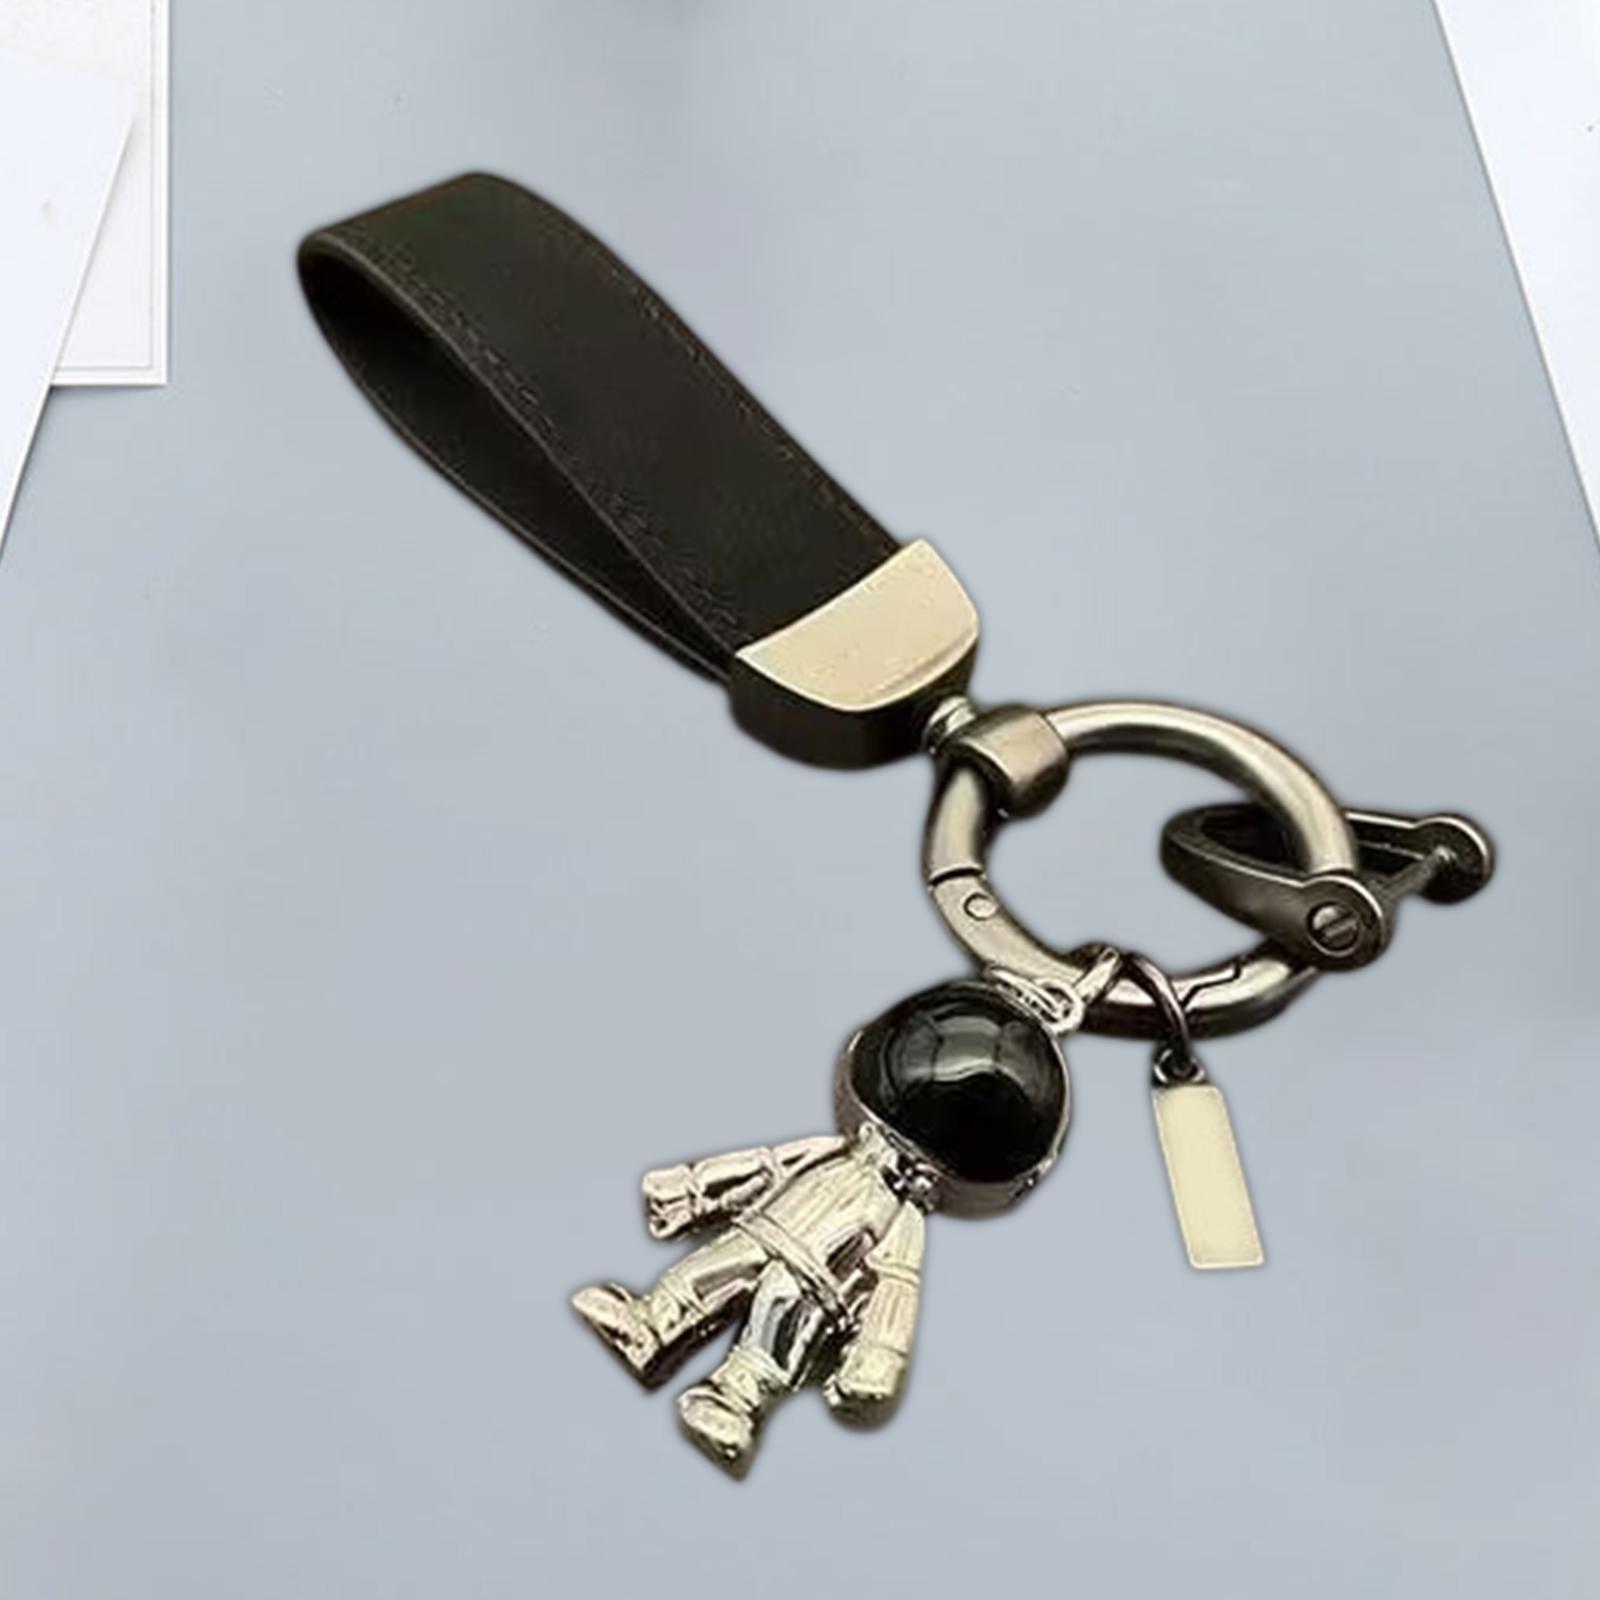 Car Key Chain Decoration Fashion Key Ring Clip for Handbag Purse Wallet Black